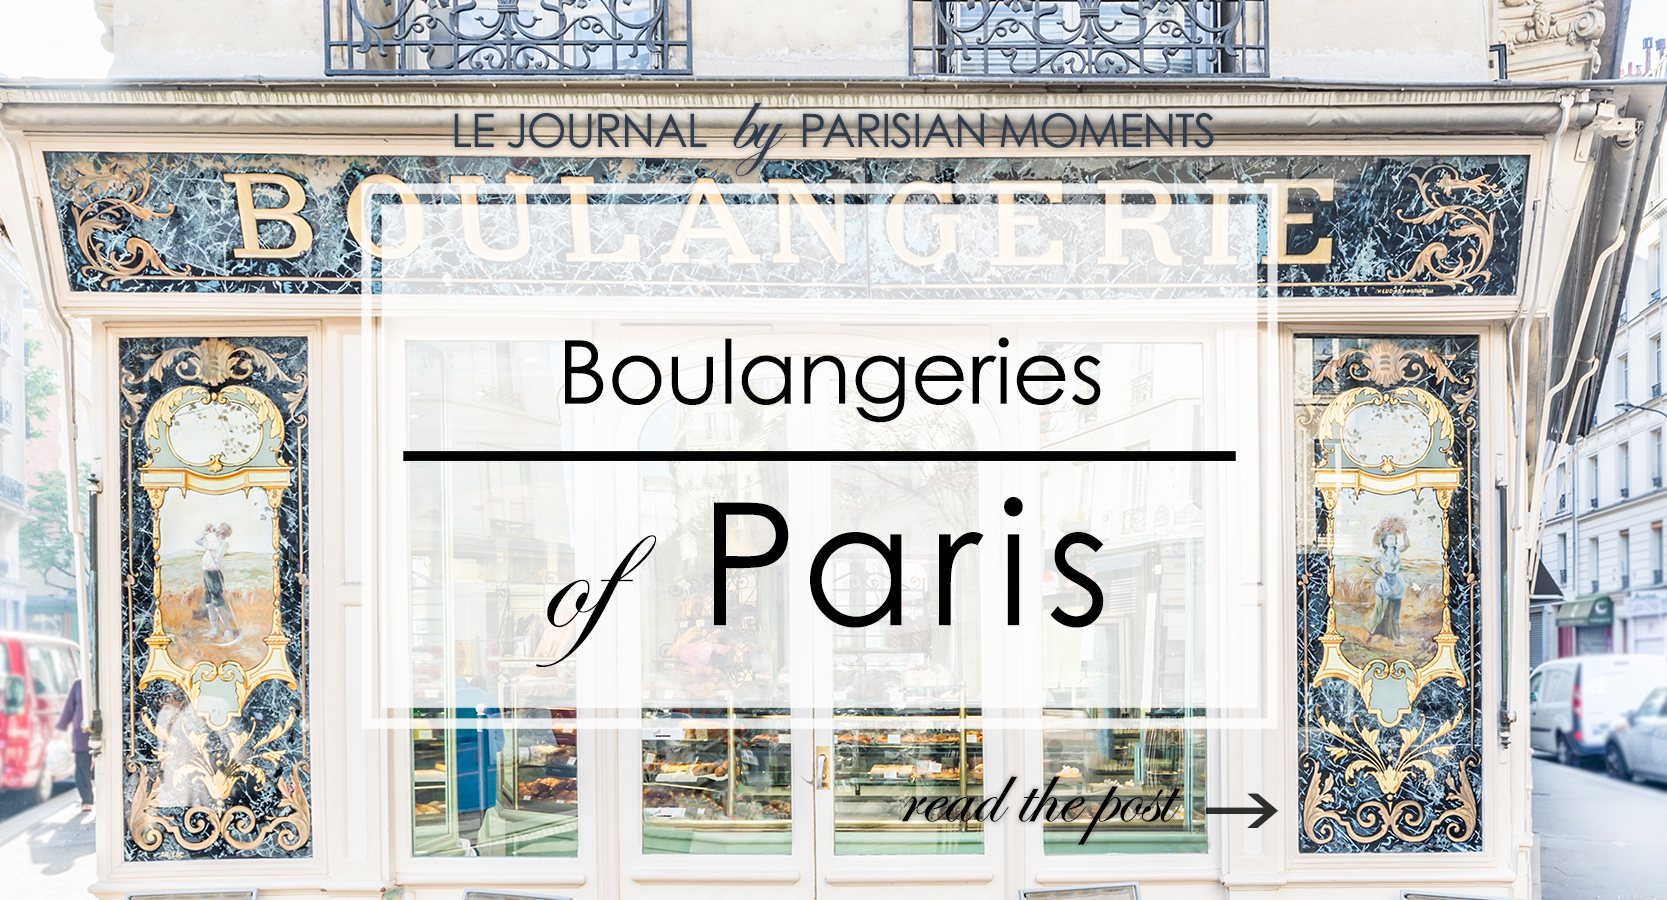 Boulangeries of Paris